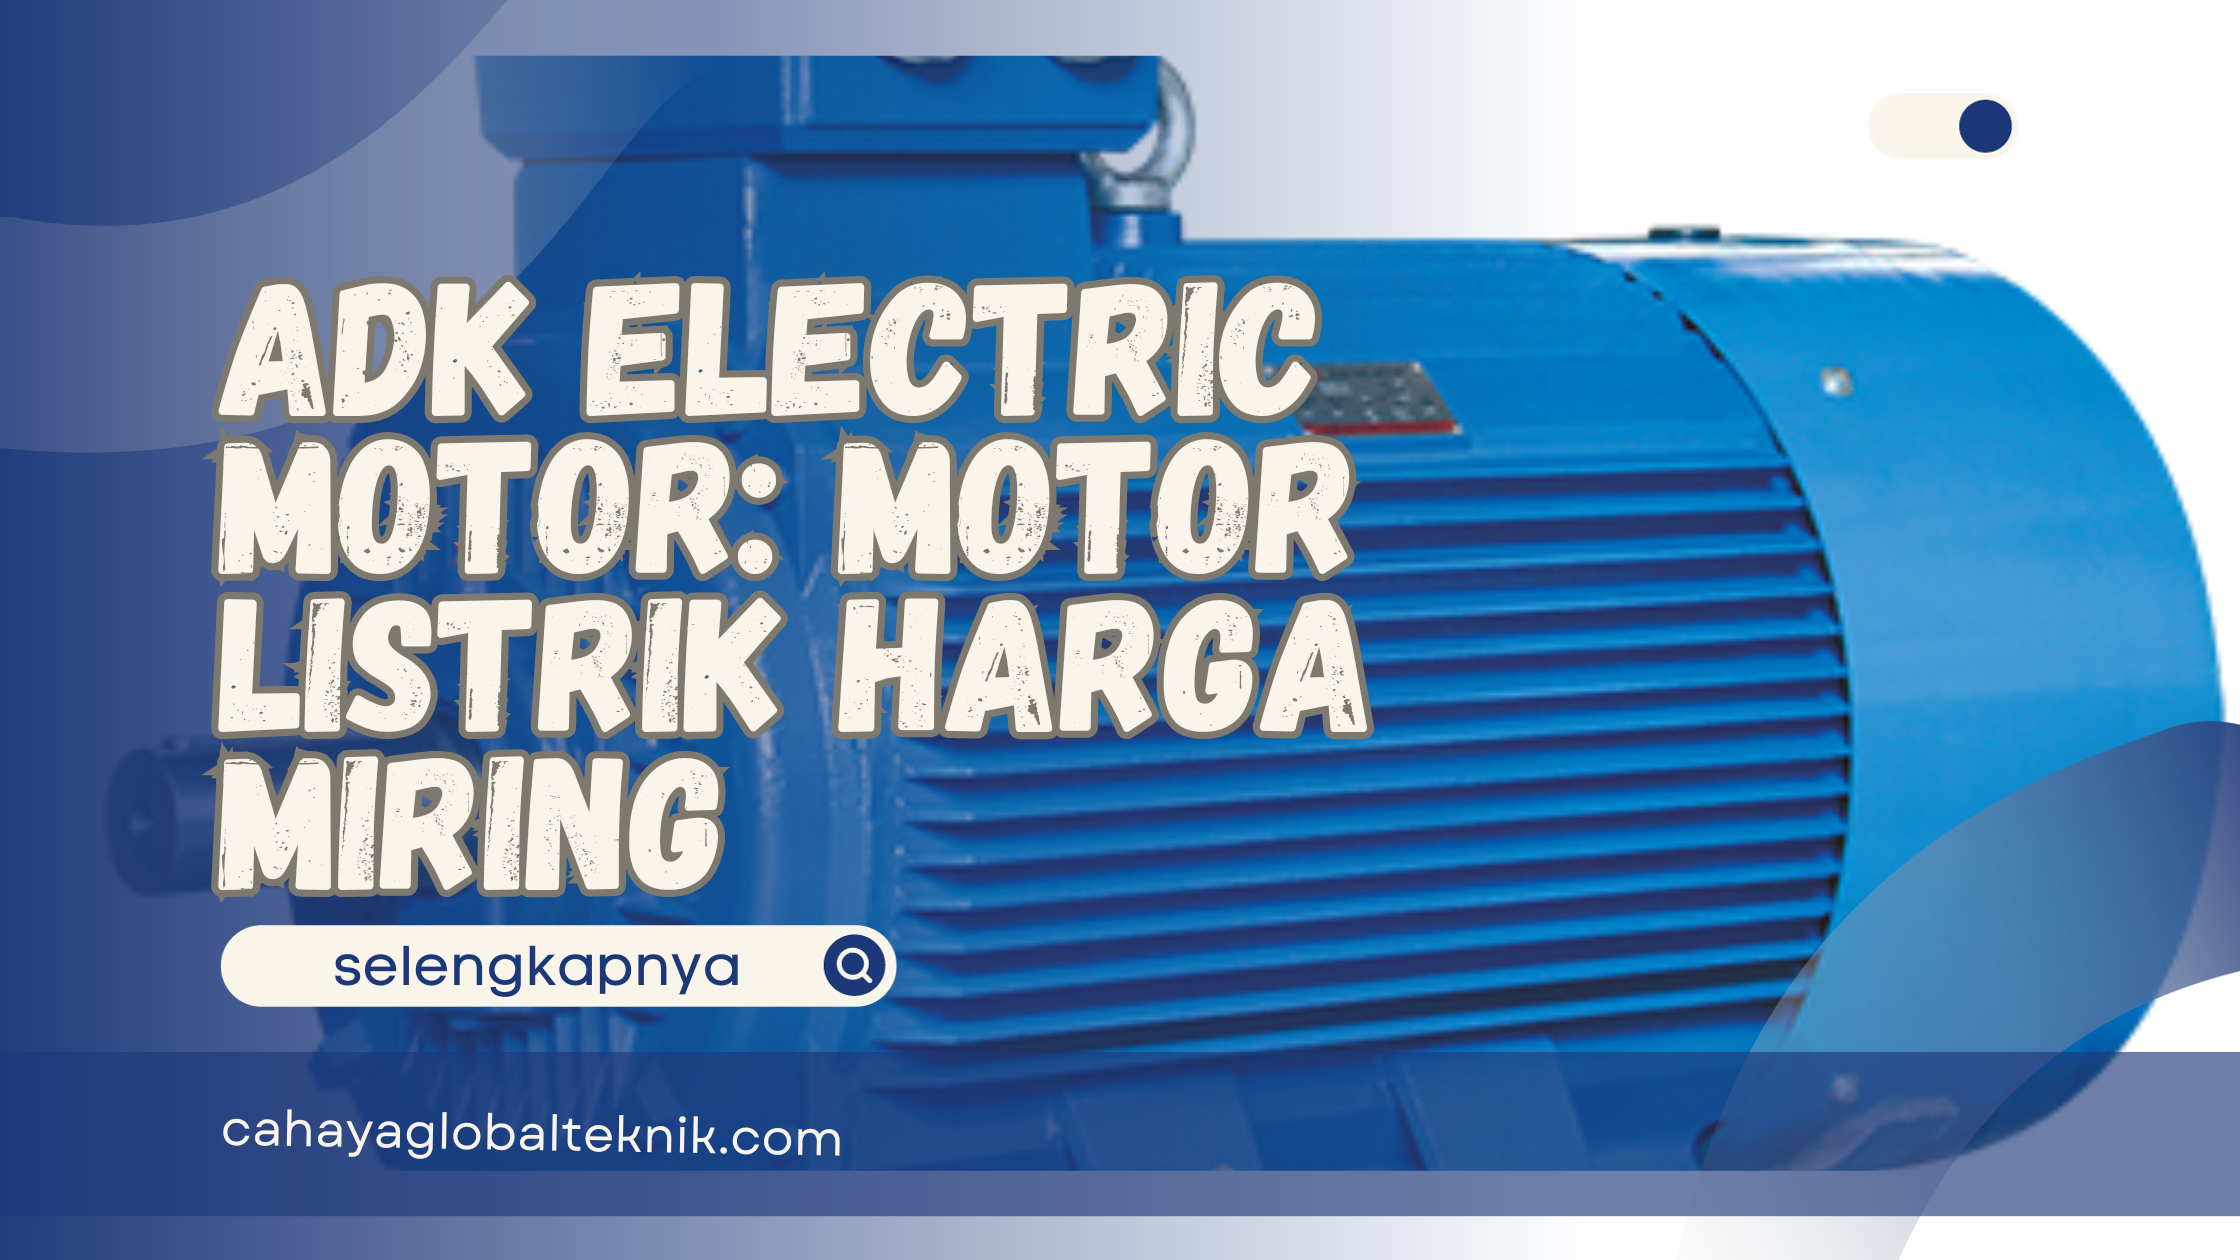 ADK Electric Motor: Motor Listrik Harga Miring